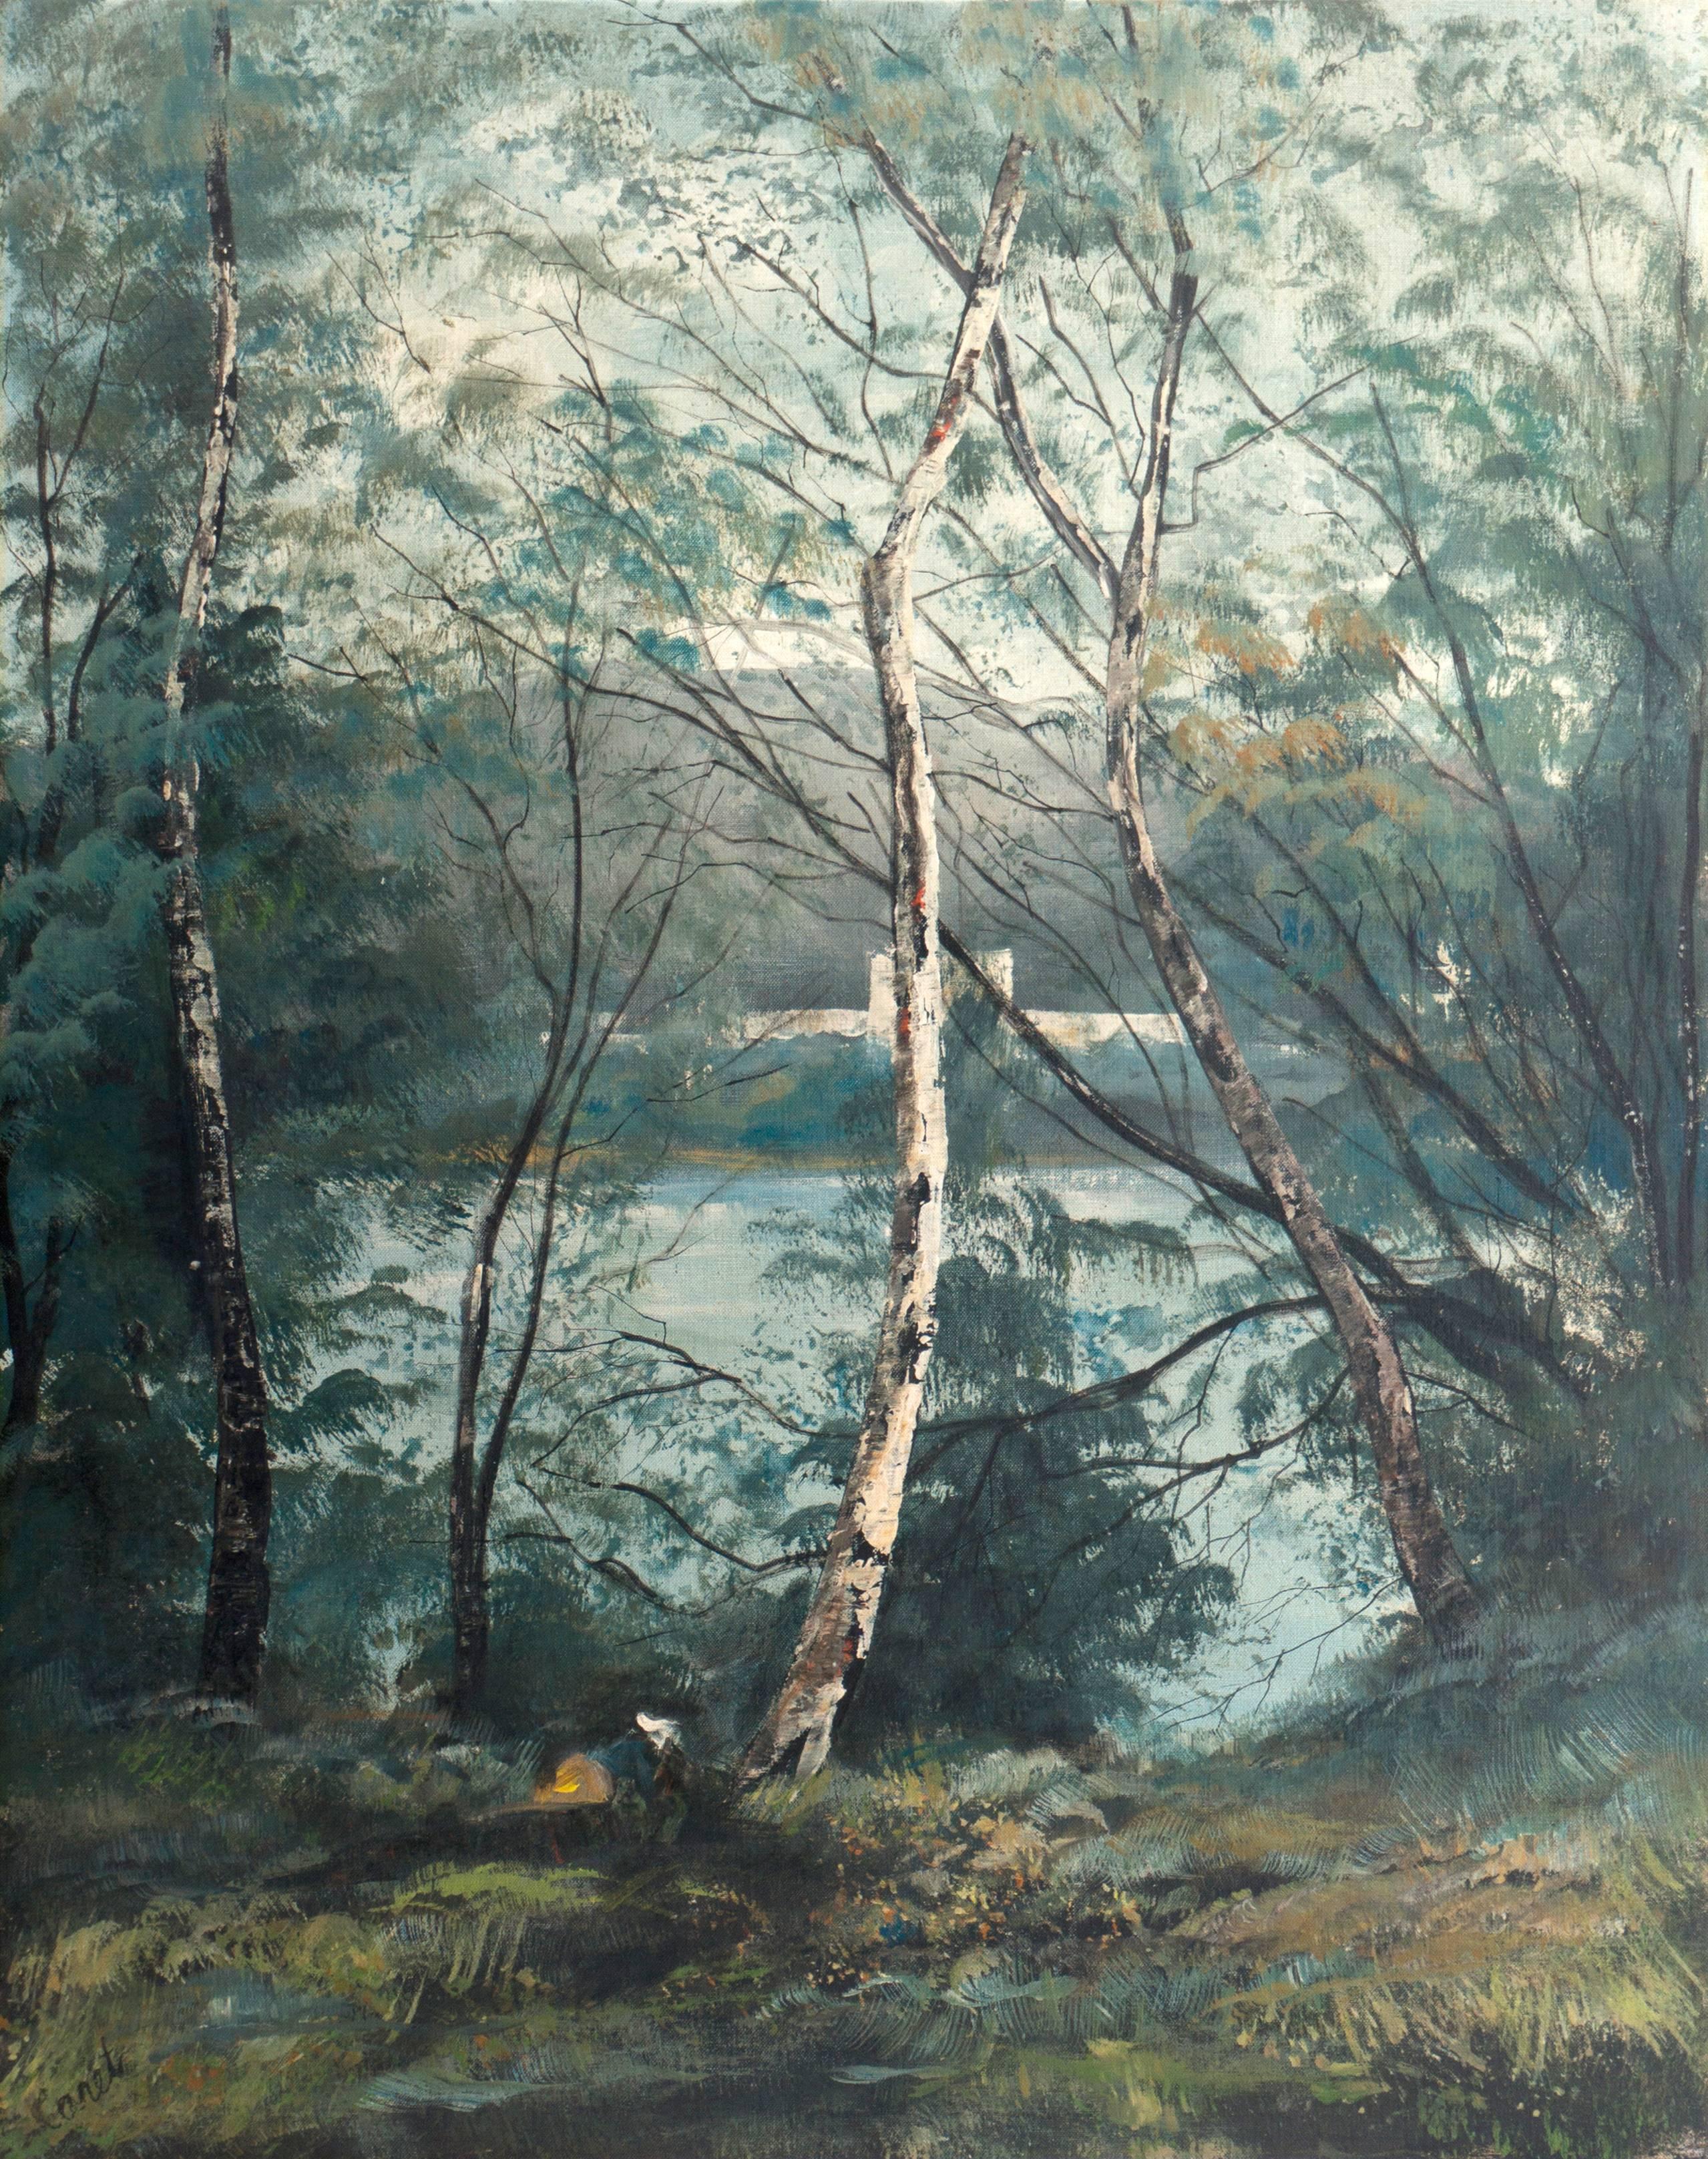 Caret Landscape Painting - 'River Landscape with Birch Trees', Italianate Romanticism